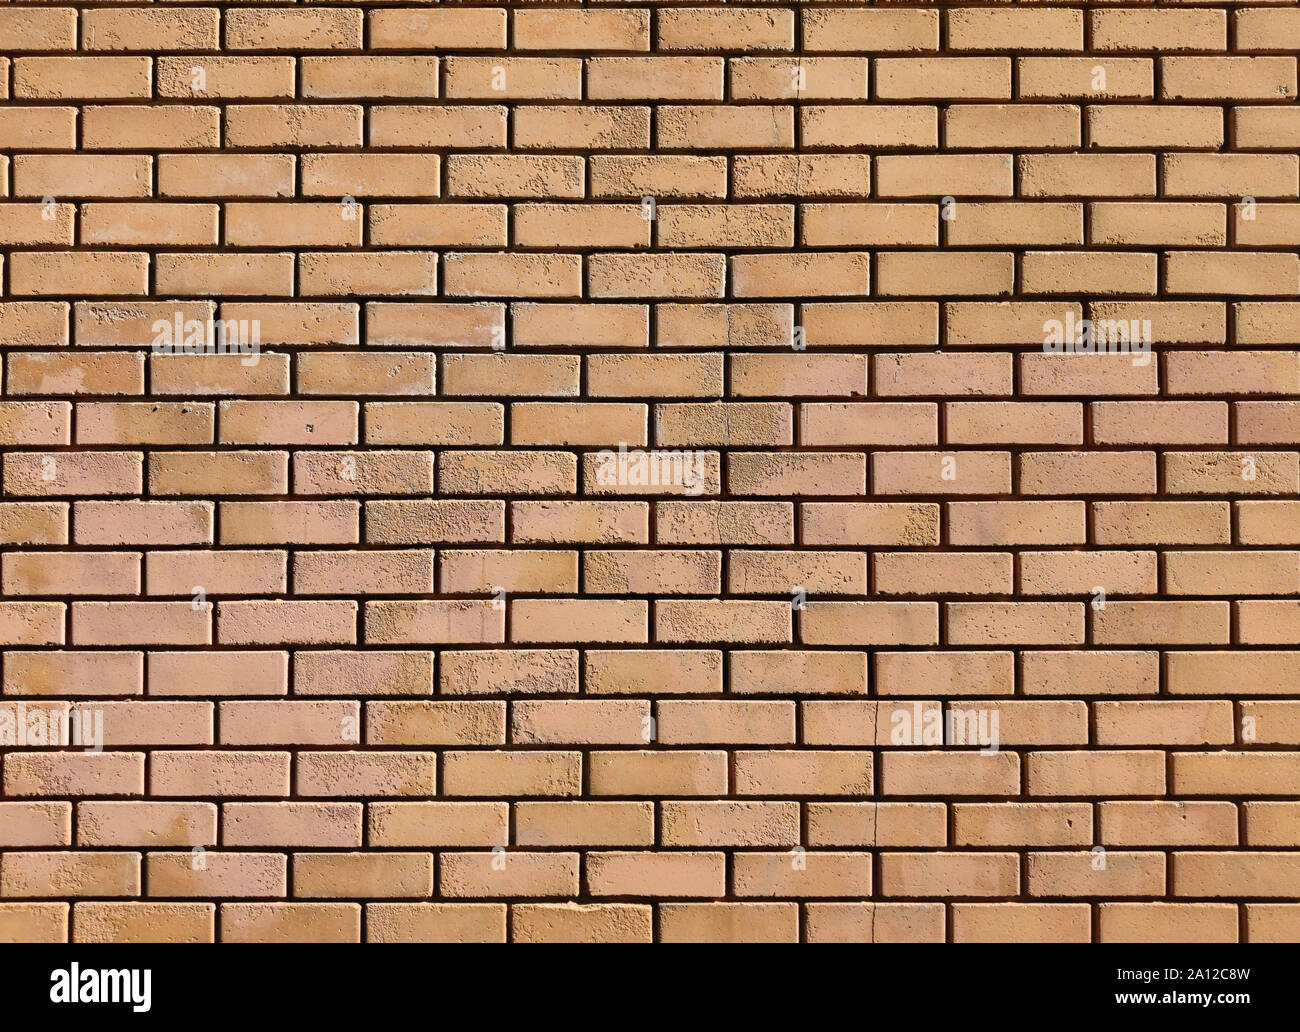 Brickwall background texture. Brown color bricks external building wall facade material Stock Photo